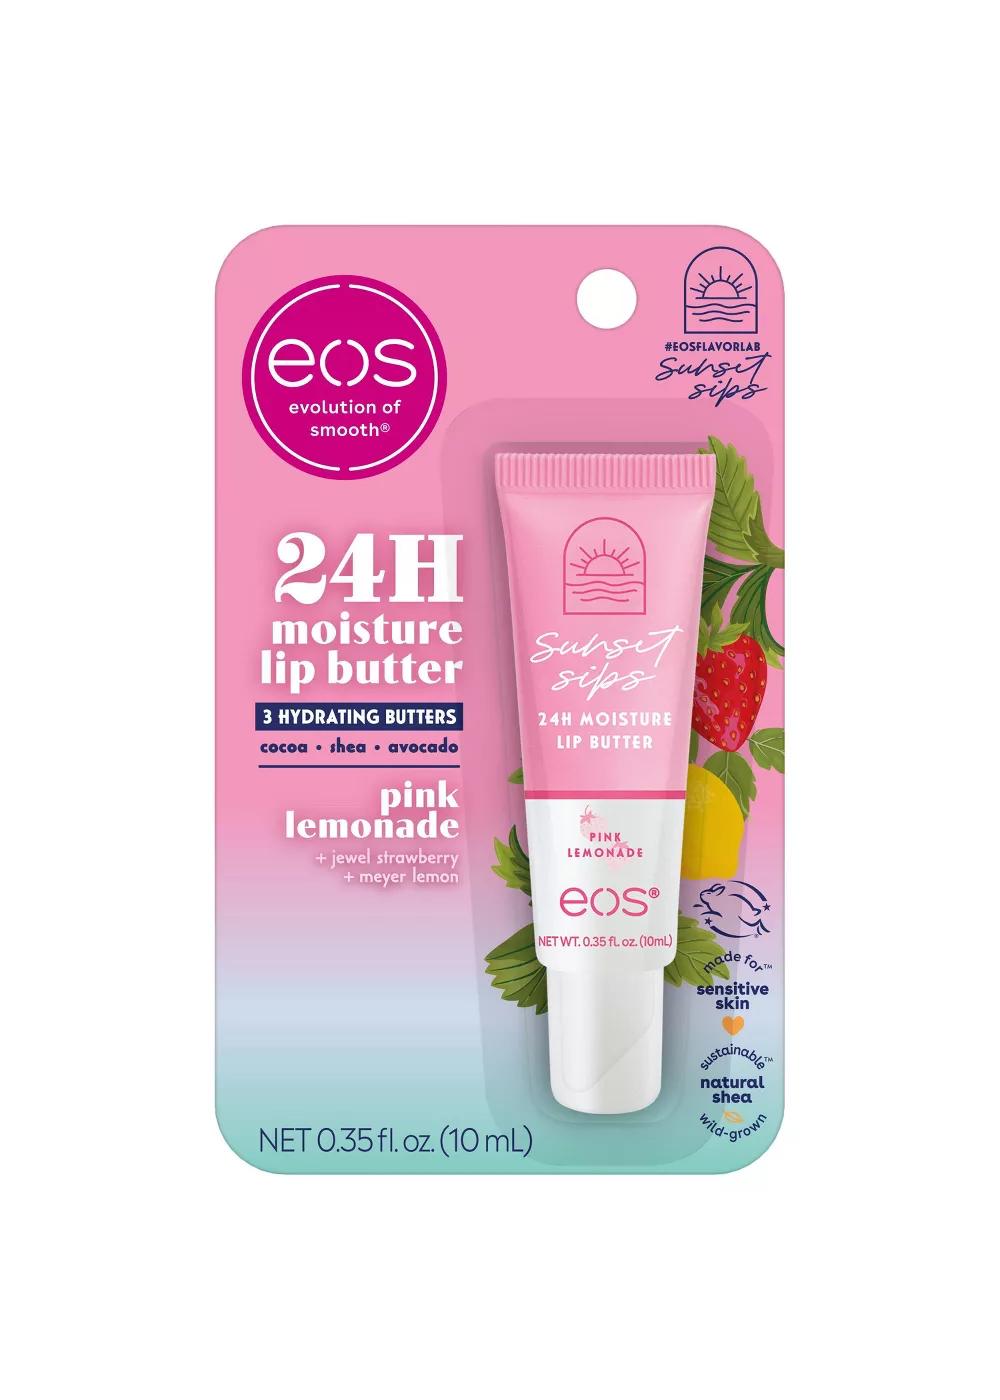 eos Lip Butter - Pink Lemonade; image 1 of 2